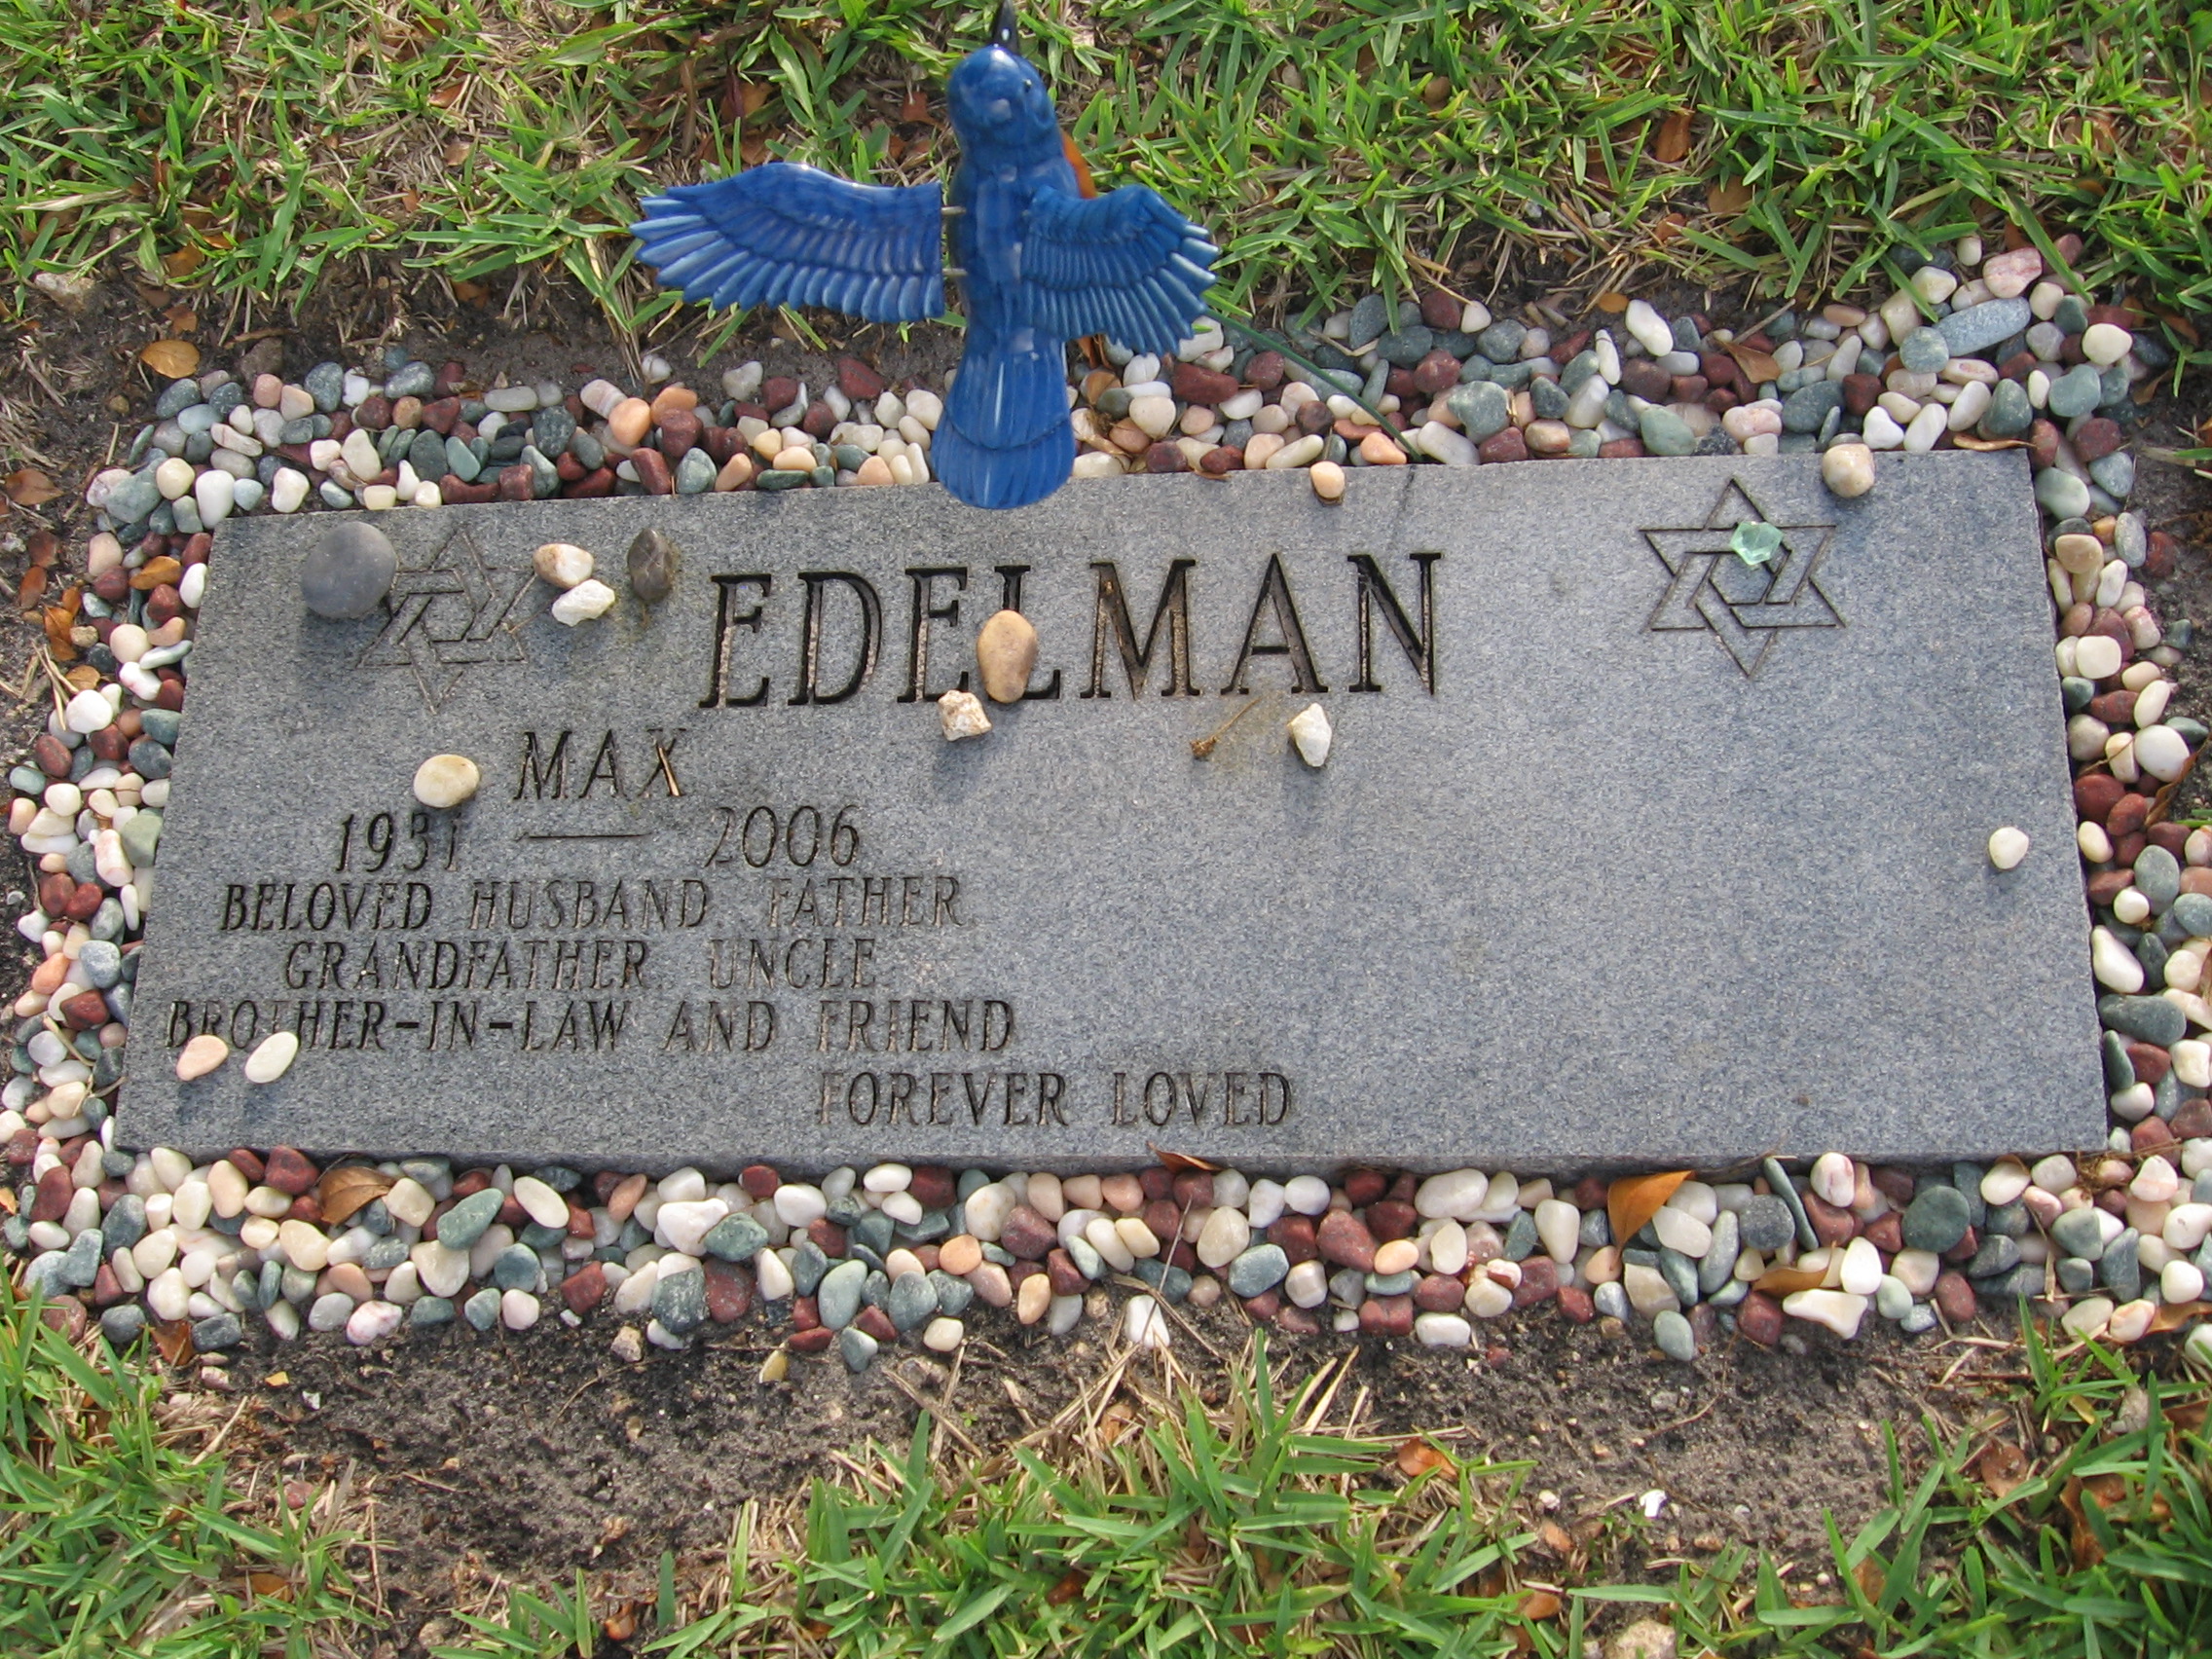 Max Edelman